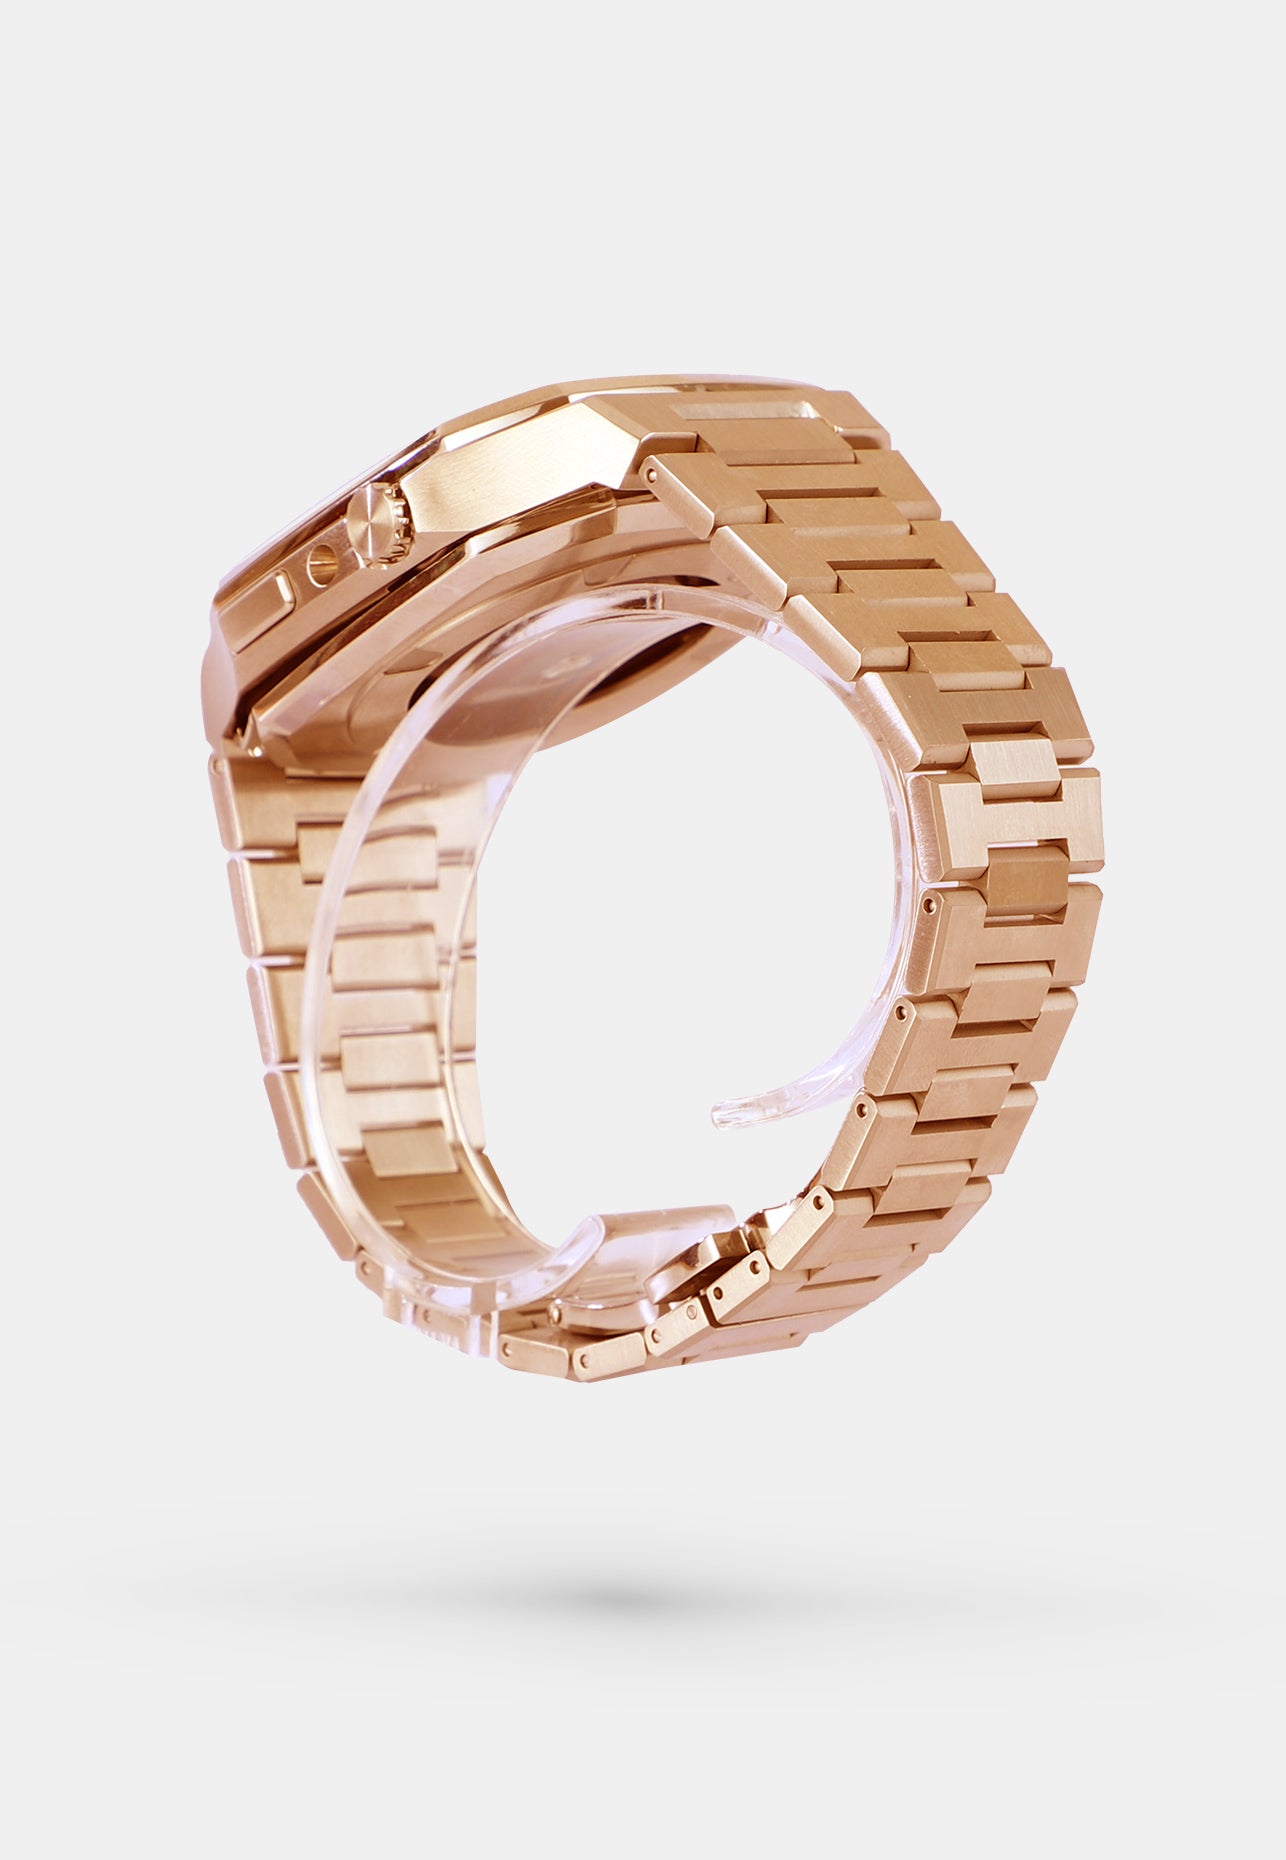 Everose Gold - Imperial OAK - Coque et bracelet Apple Watch - 44mm